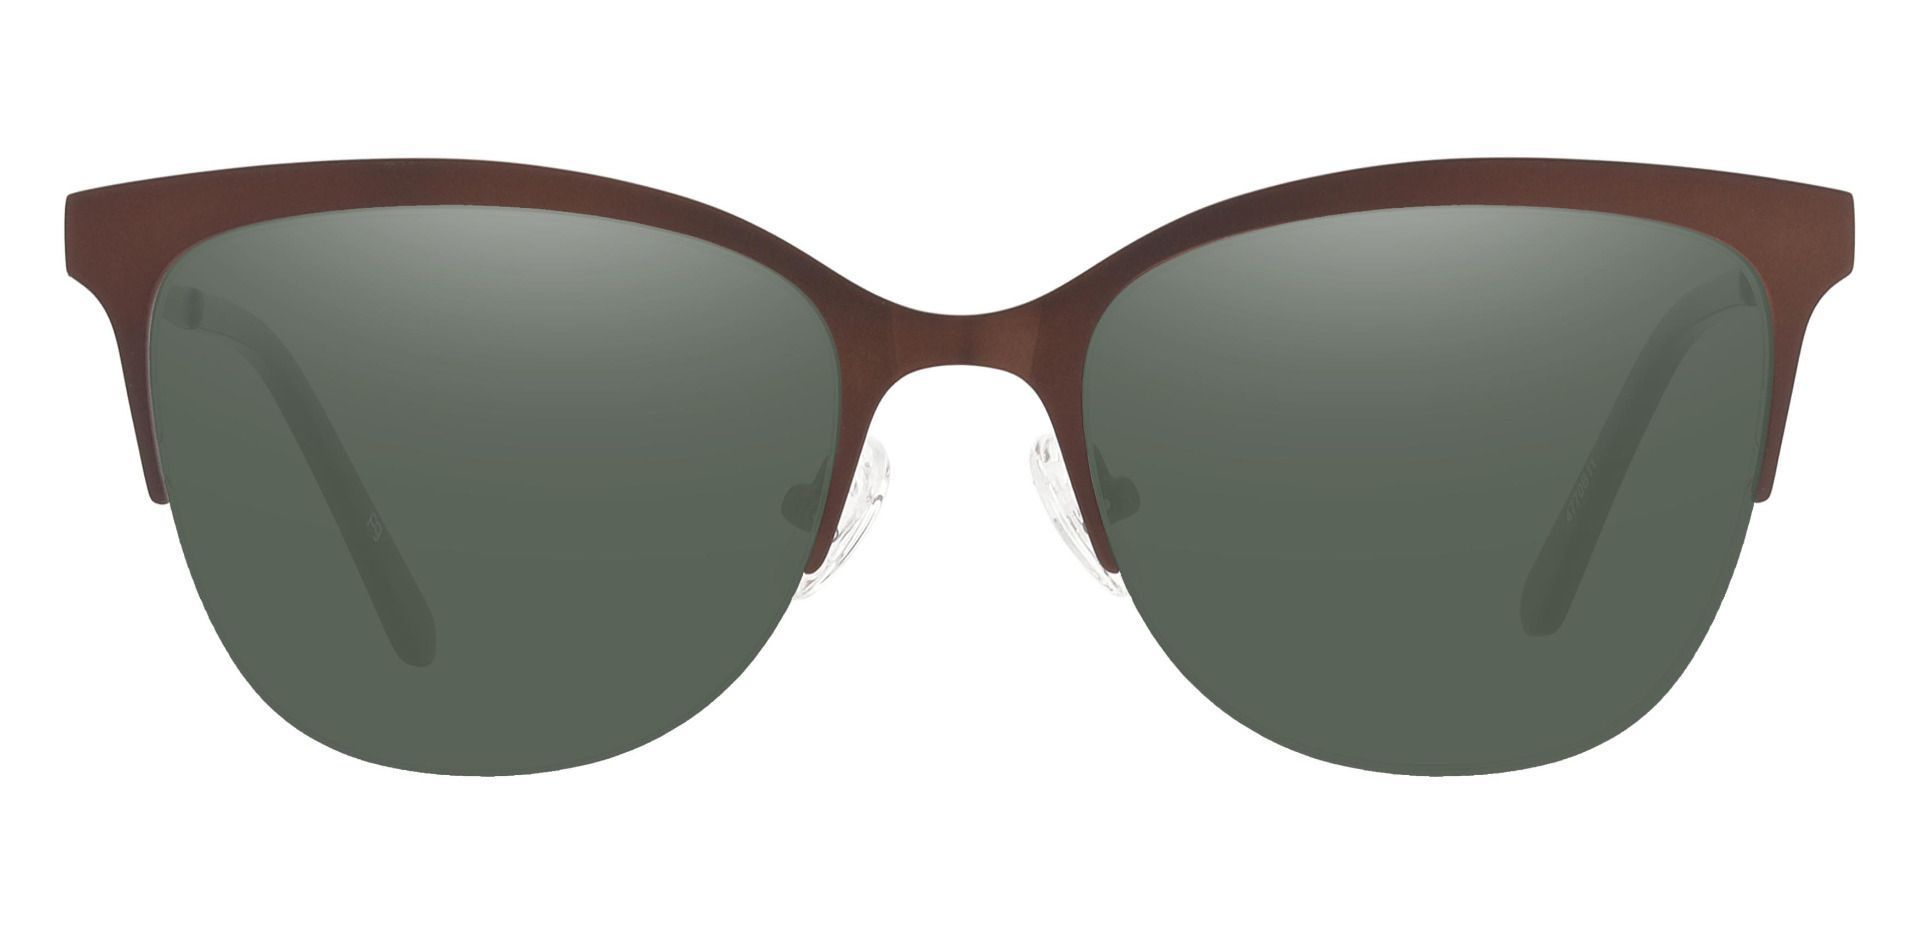 Winnie Oval Prescription Sunglasses - Brown Frame With Green Lenses